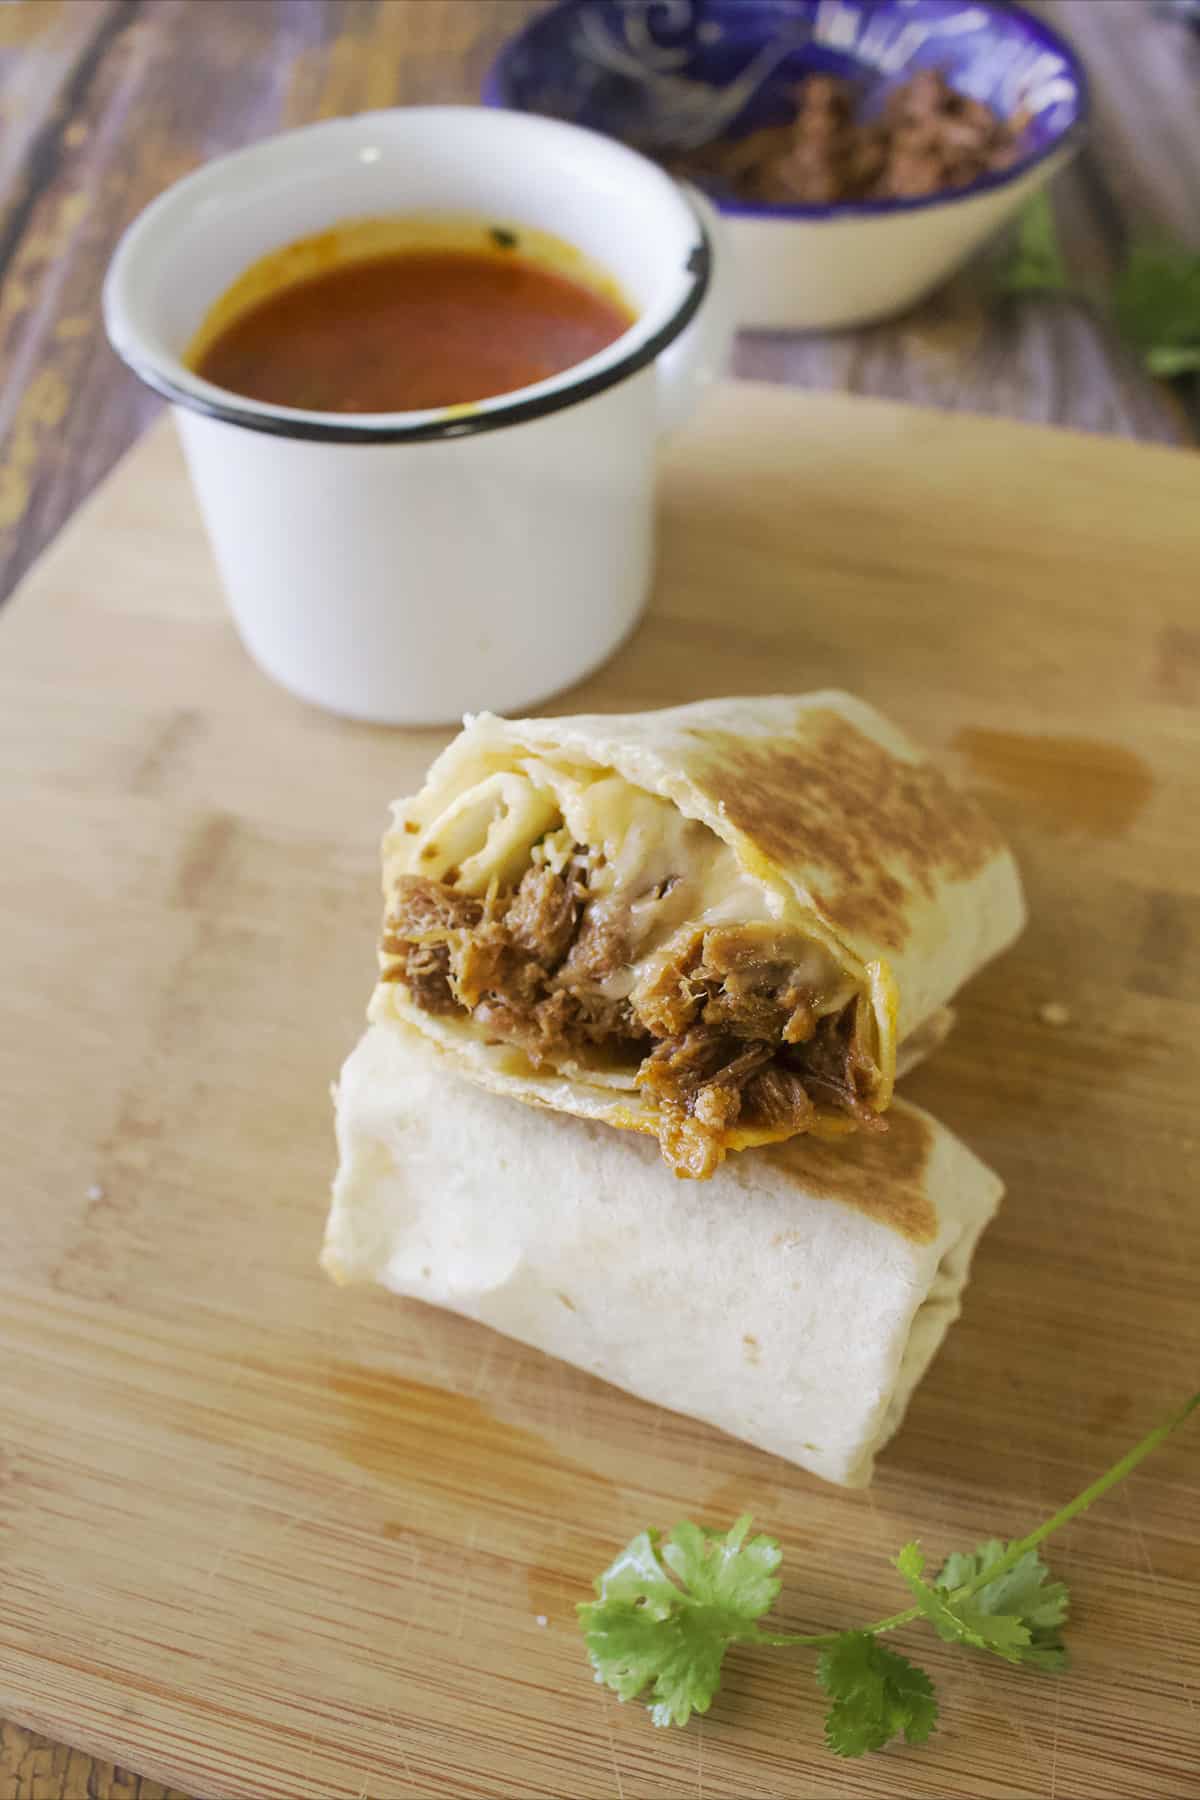 A birria burrito cut in half next to consomme.